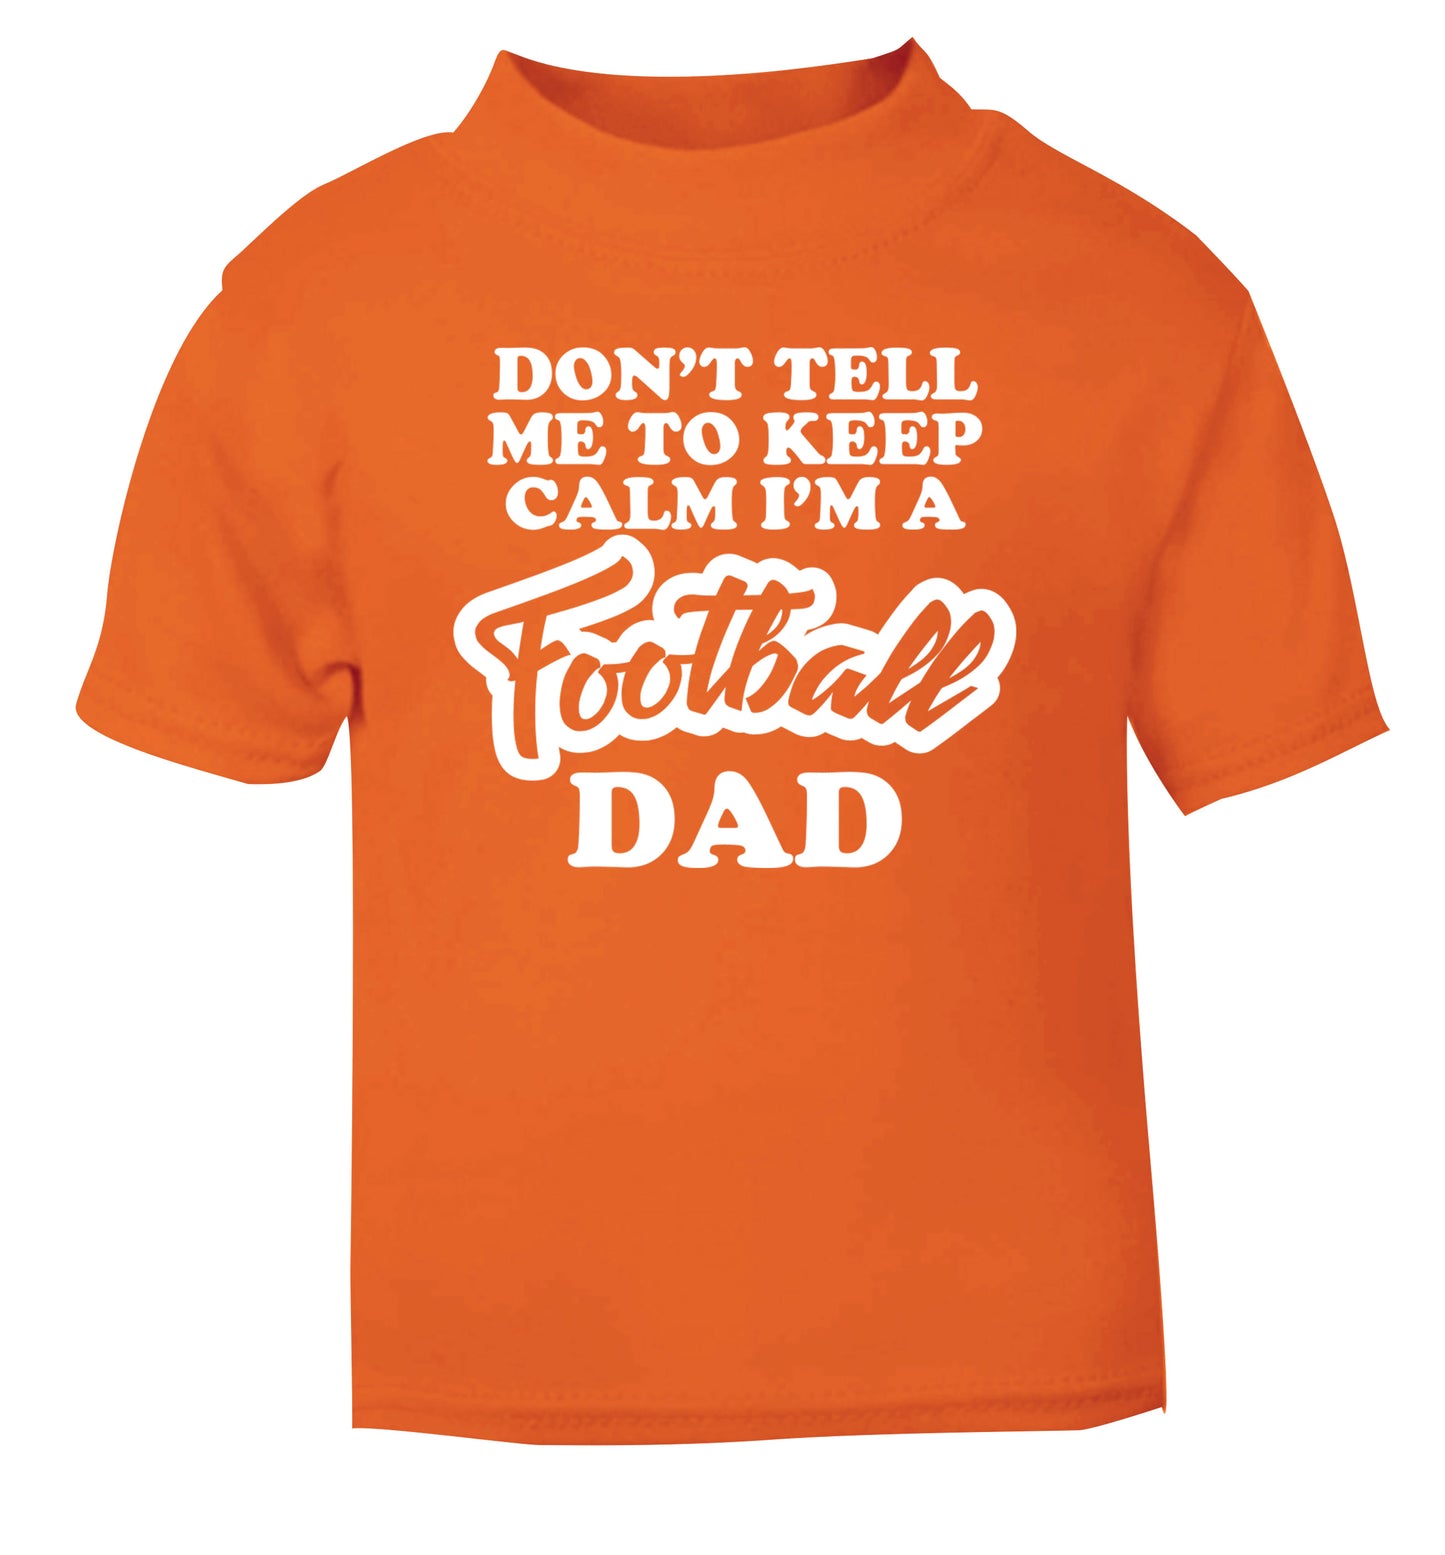 Don't tell me to keep calm I'm a football grandad orange Baby Toddler Tshirt 2 Years